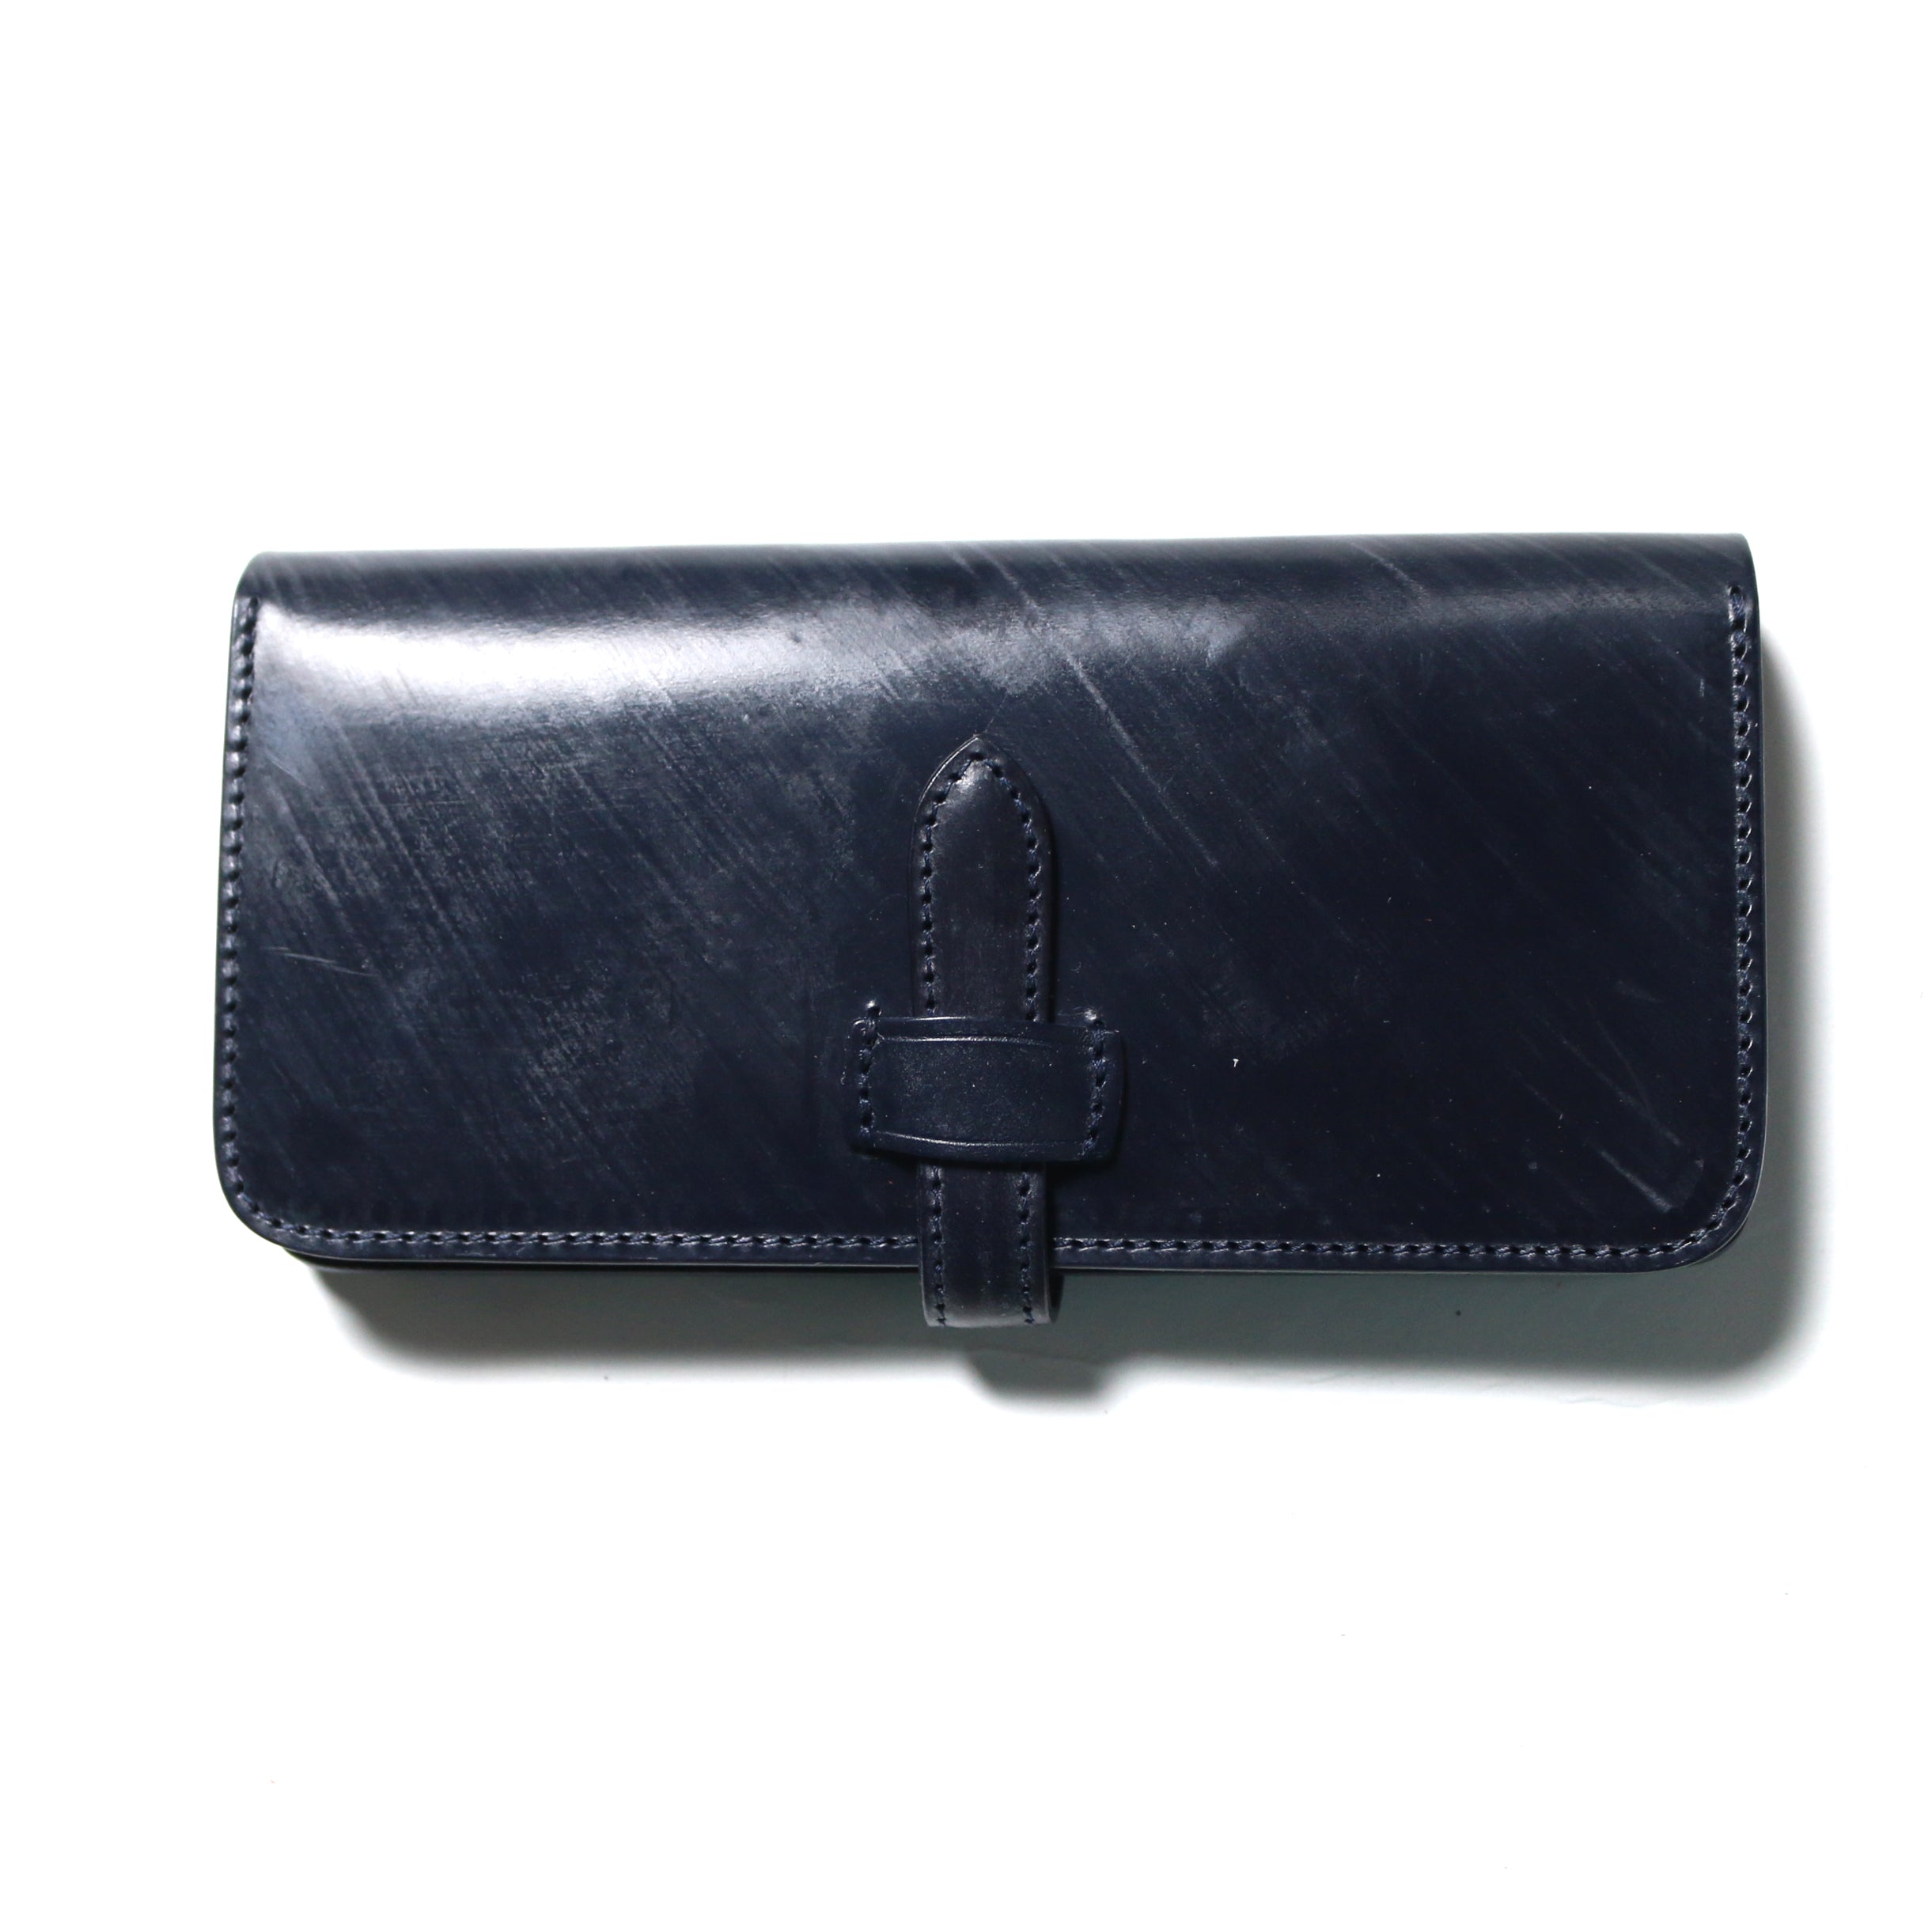 SL170 bridle leather long wallet